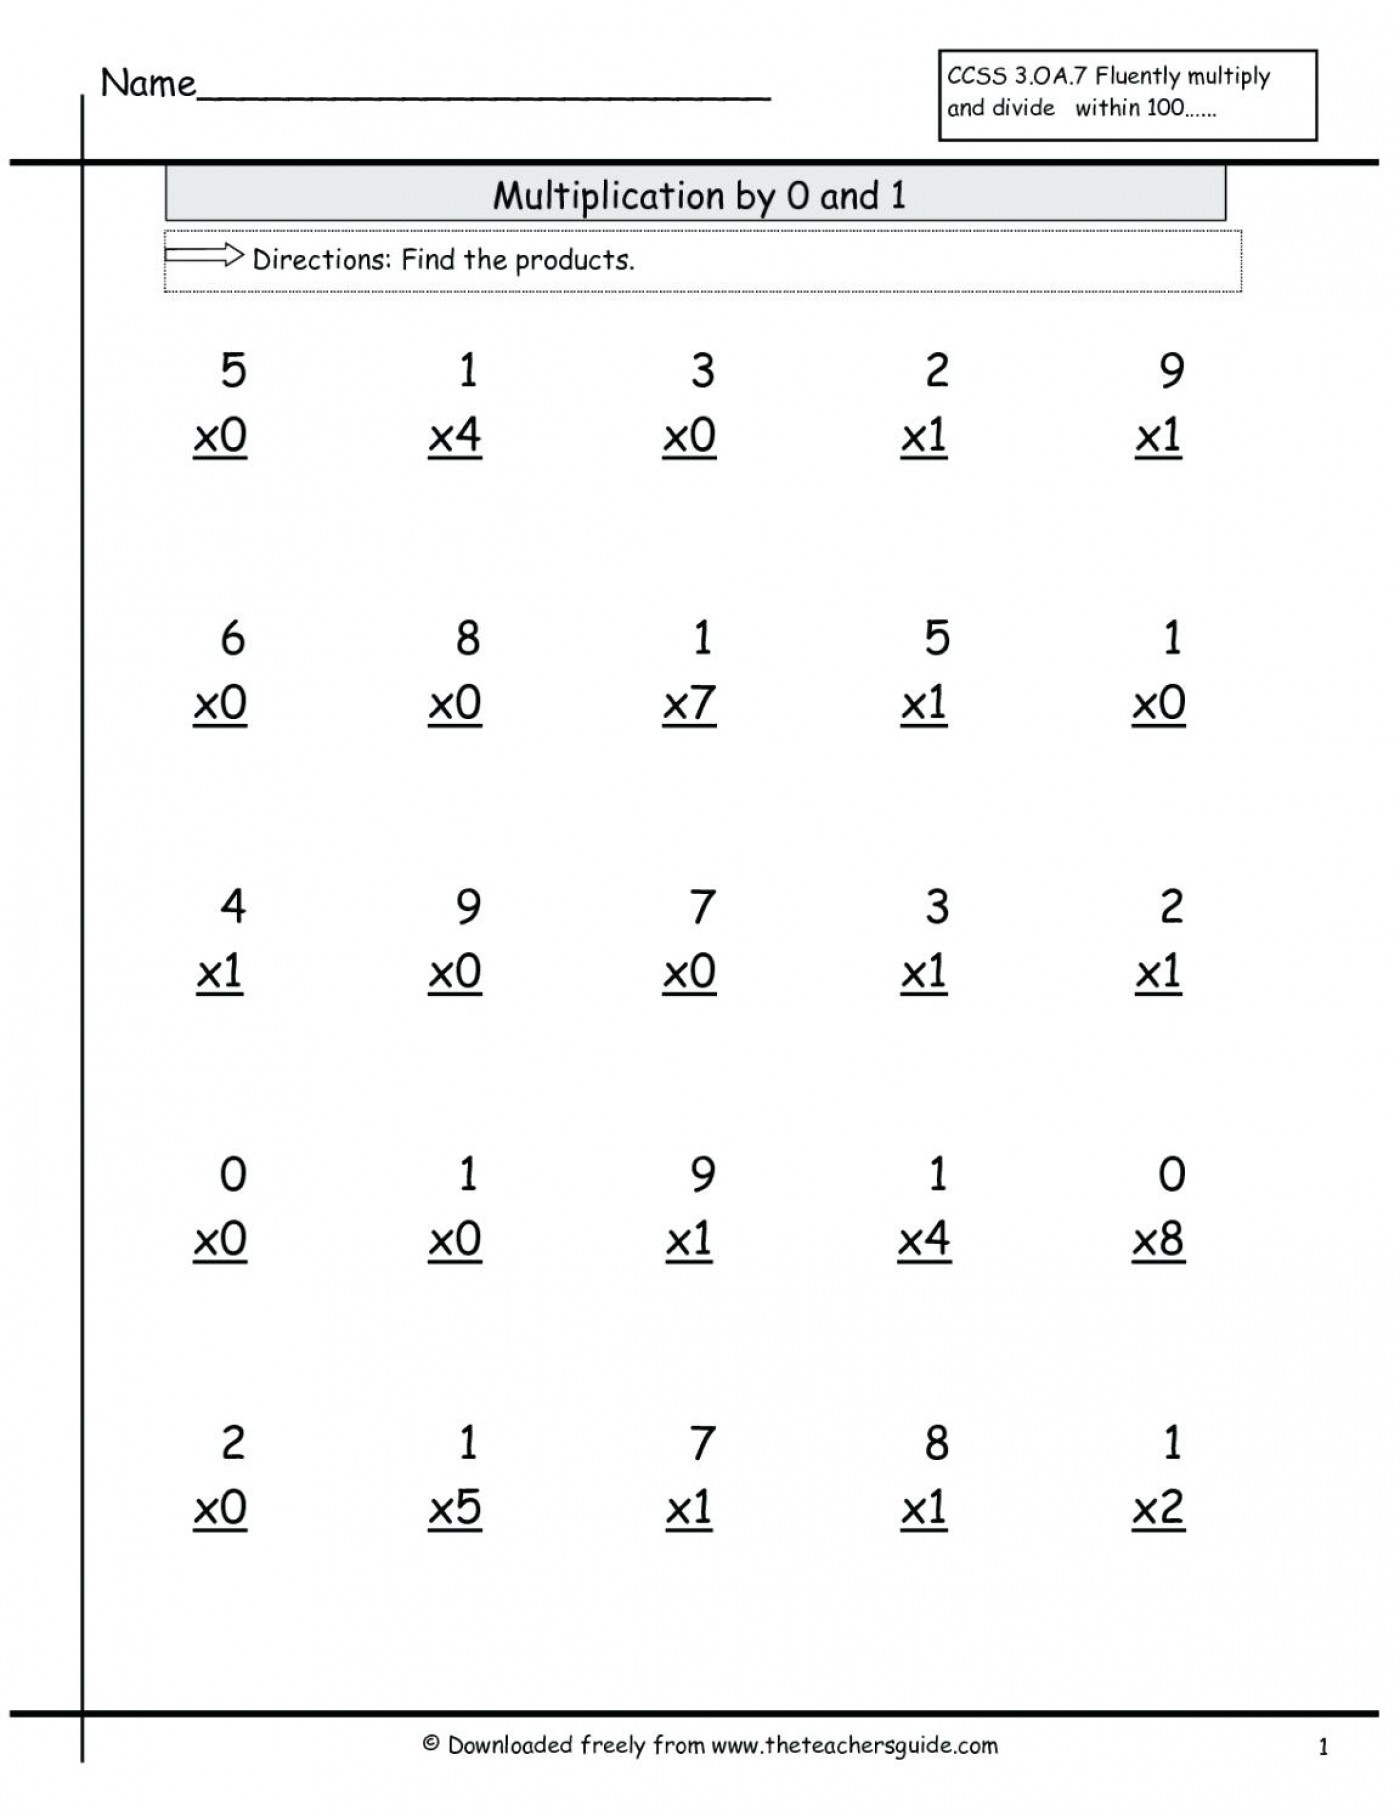 Free Math Worksheets Second Grade 2 Multiplication Multiplication Table 2 Missing Factor